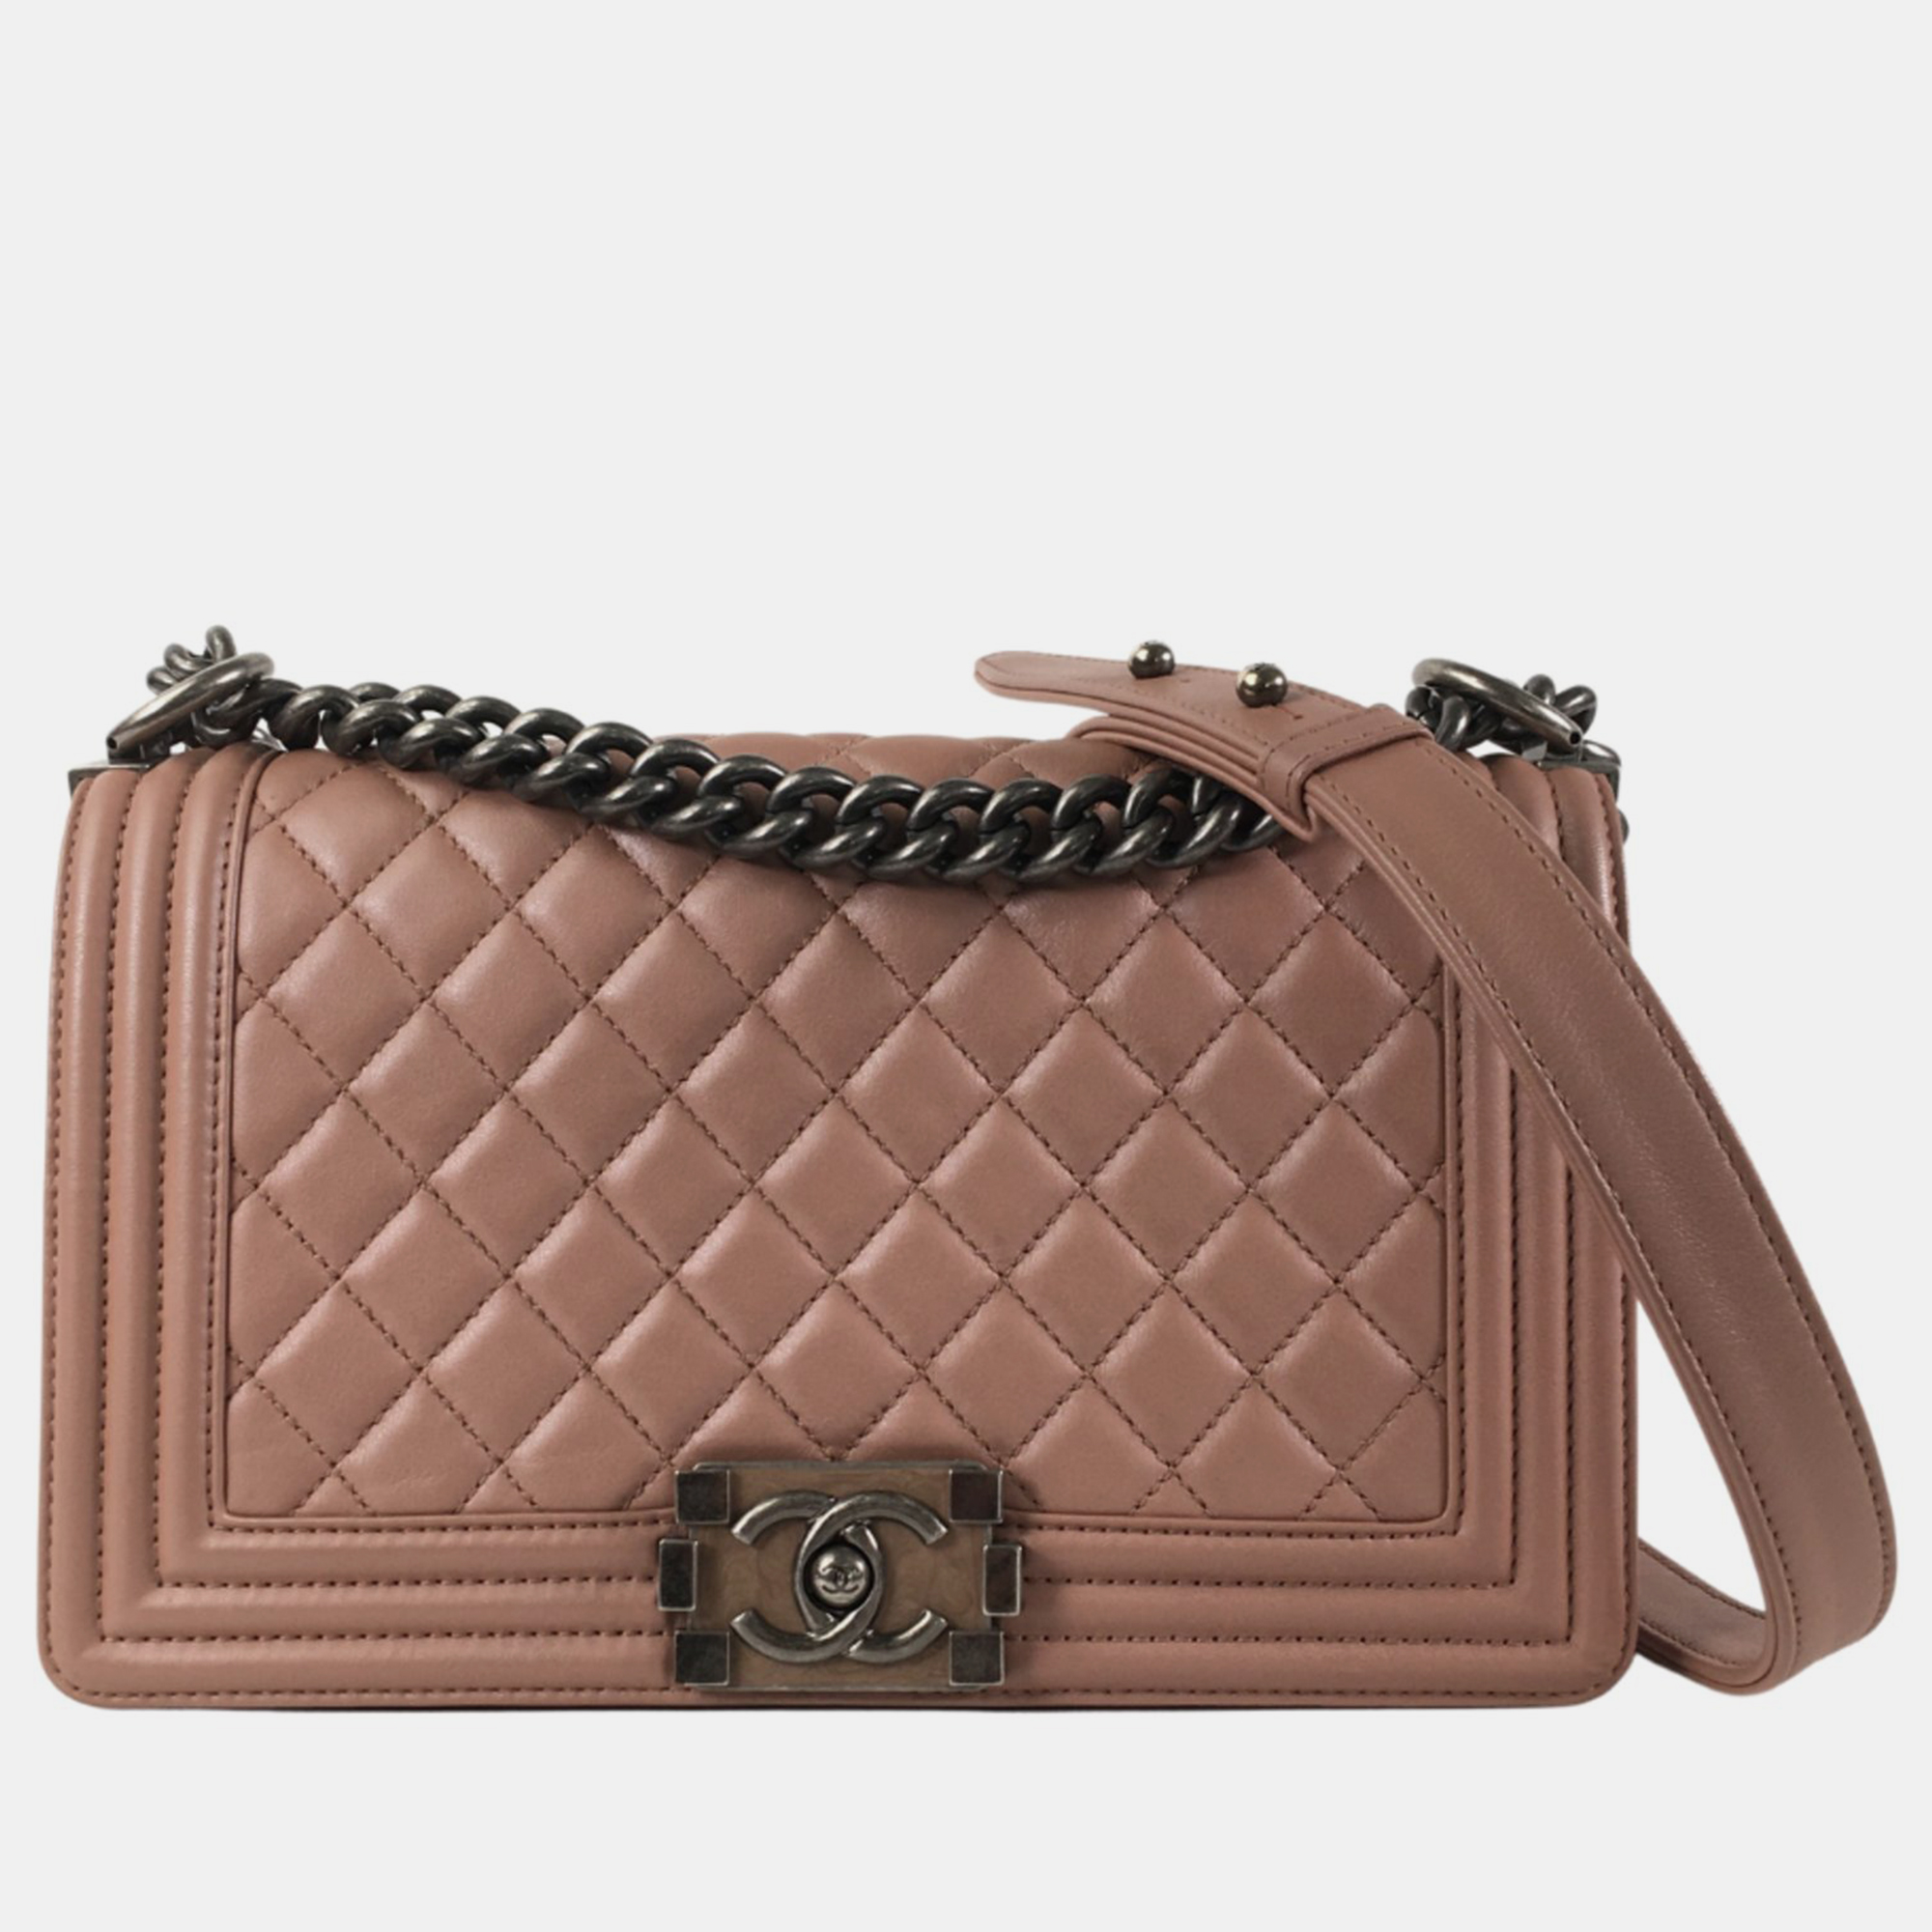 Chanel pink lambskin leather medium boy bag